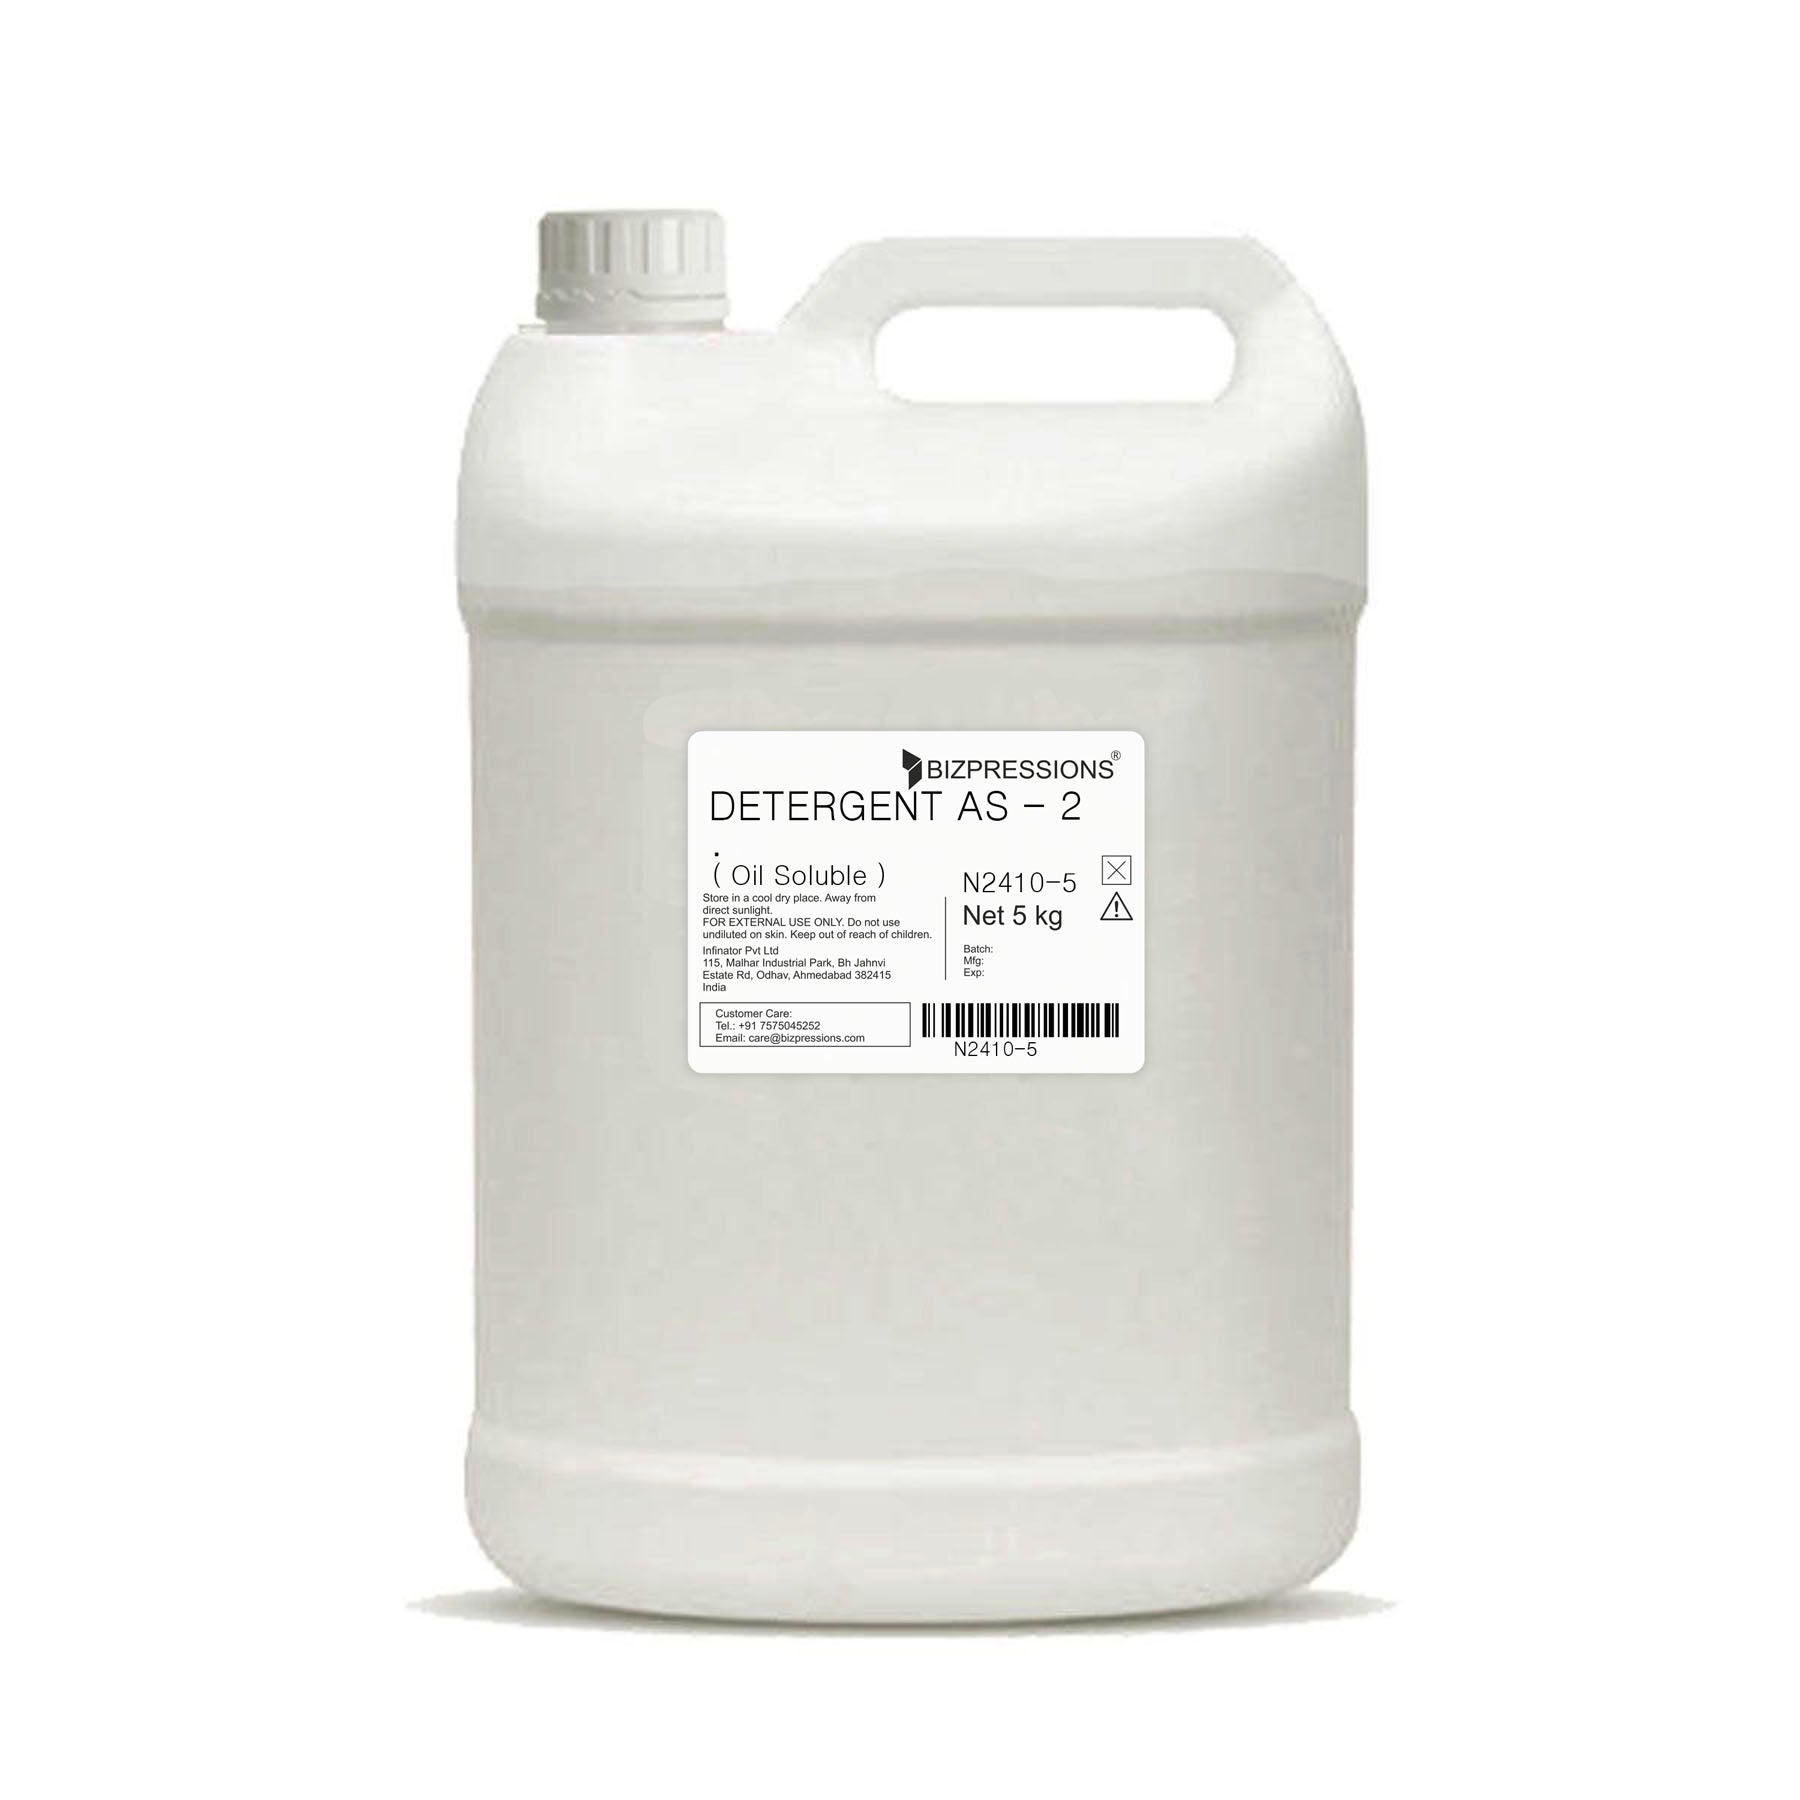 DETERGENT AS - 2 - Fragrance ( Oil Soluble ) - 5 kg